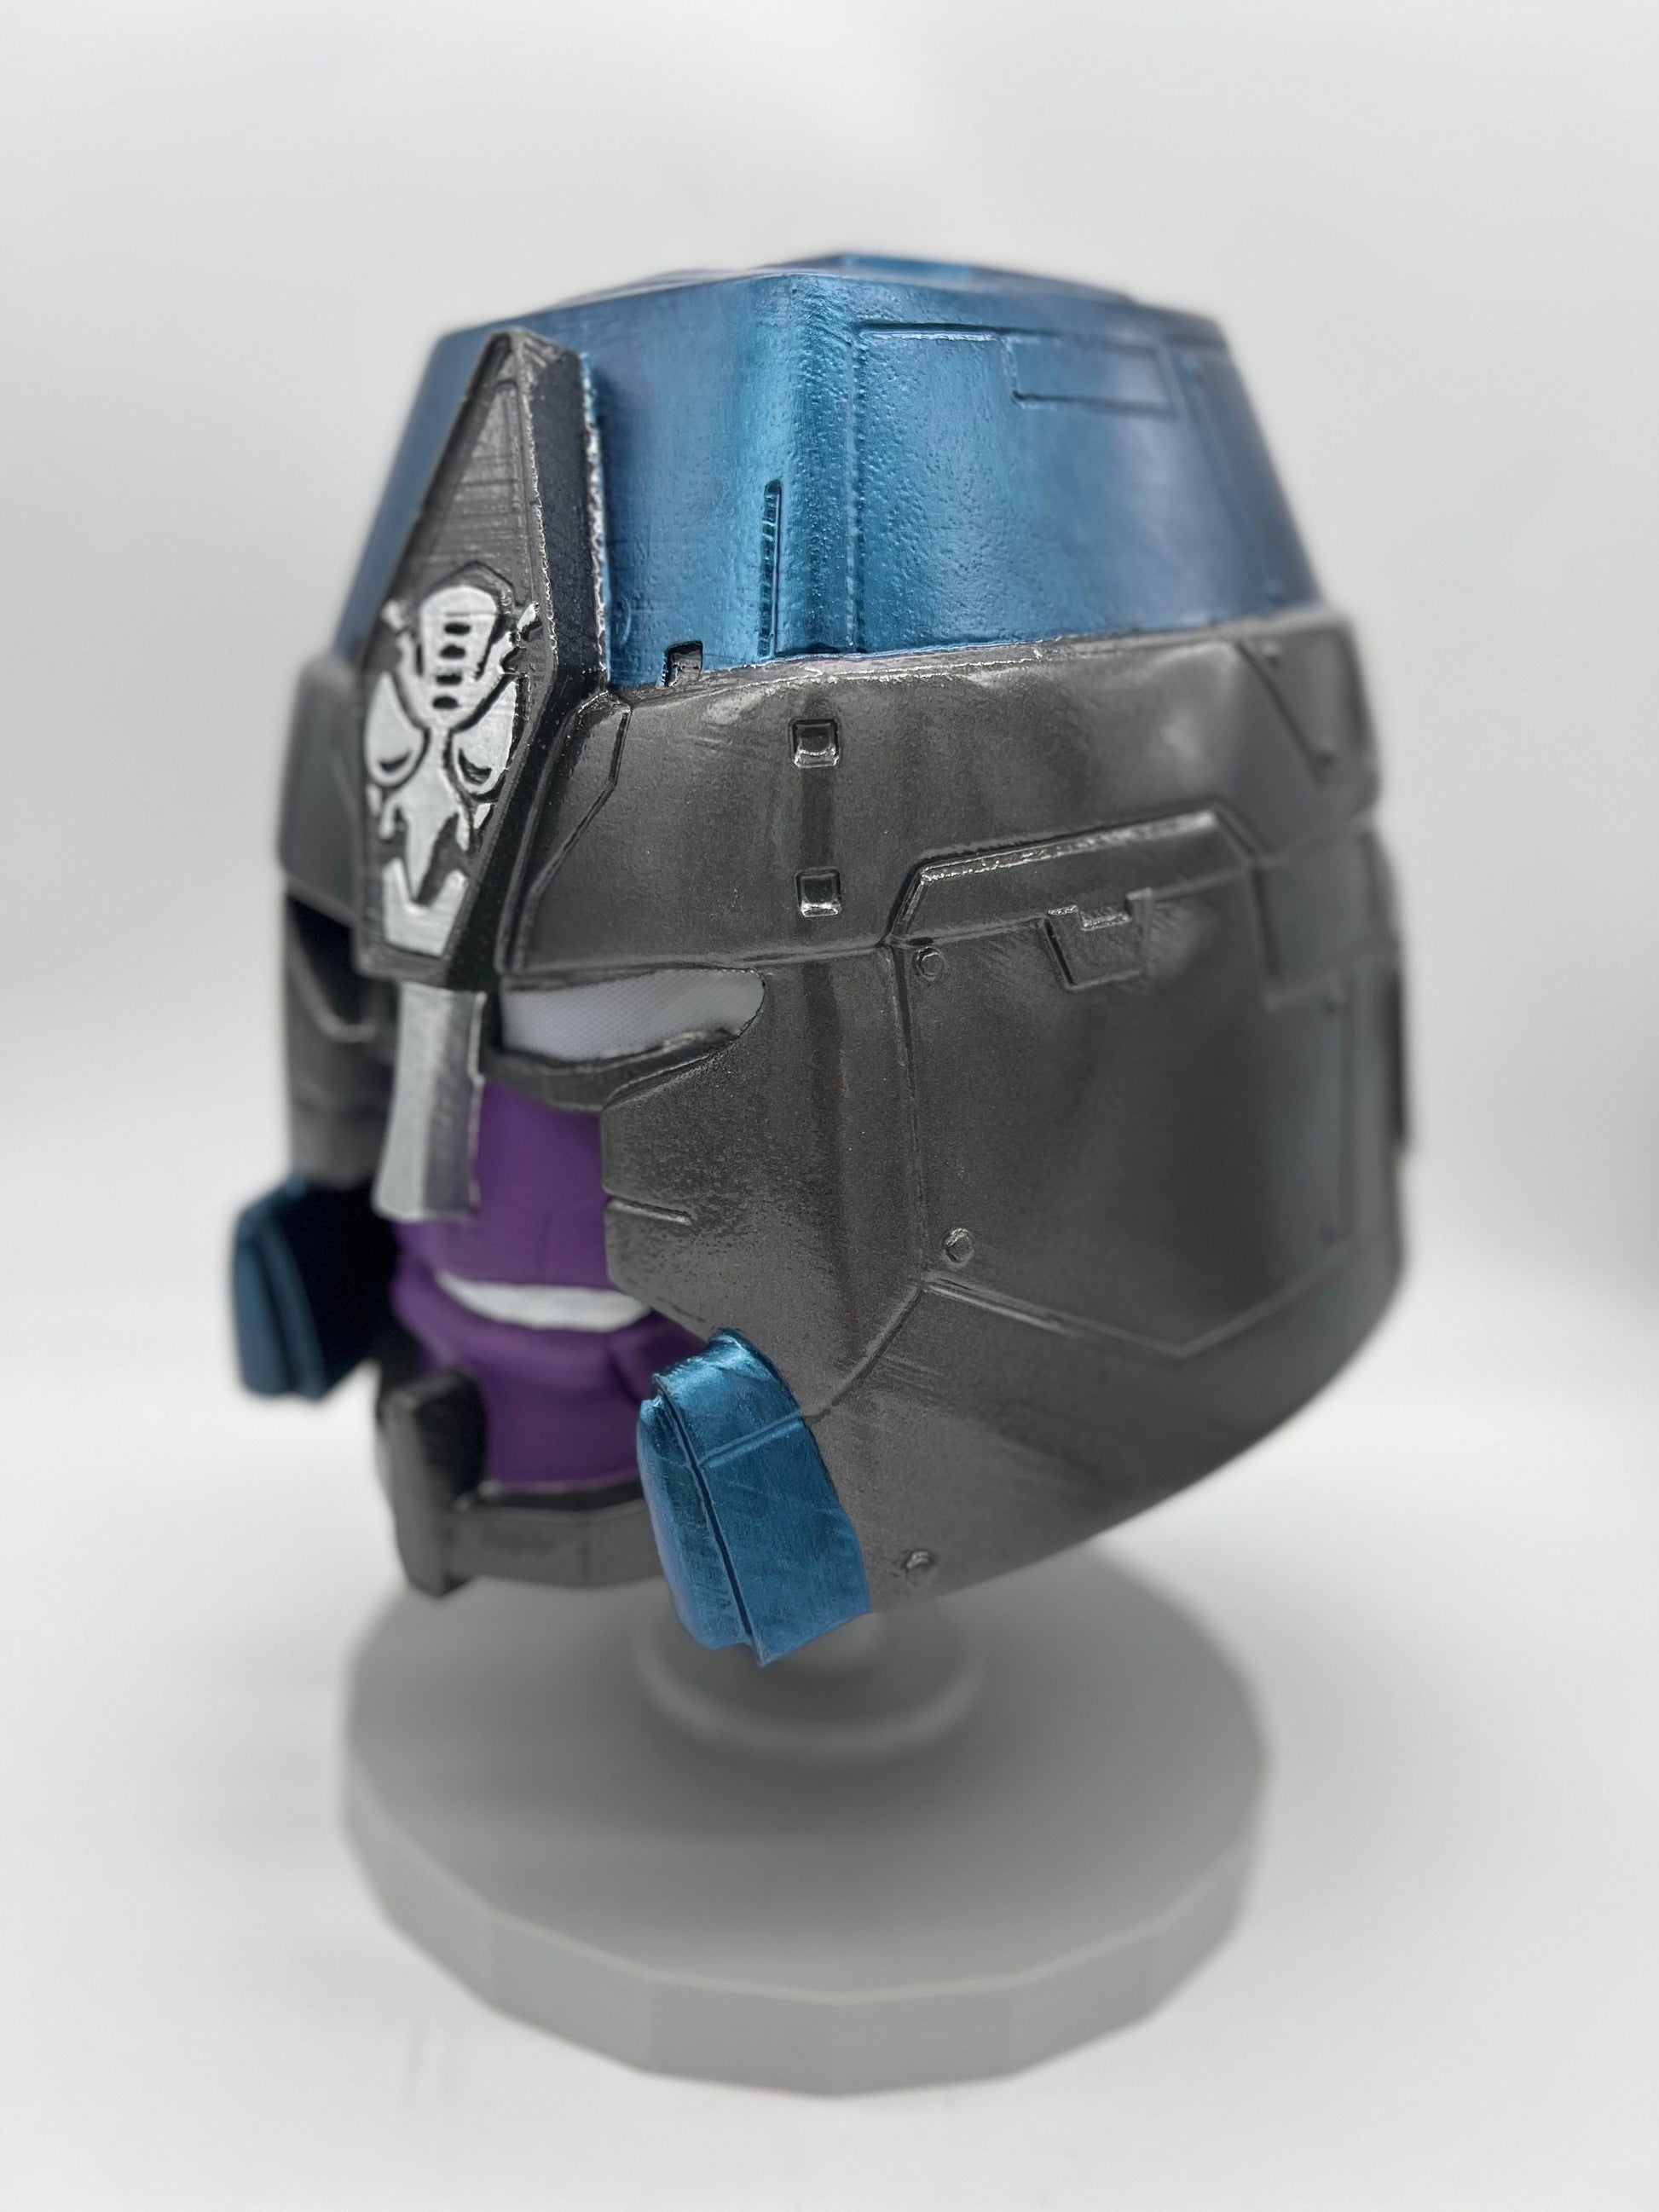 Megatron Beast Wars Wearable Cosplay Helmet